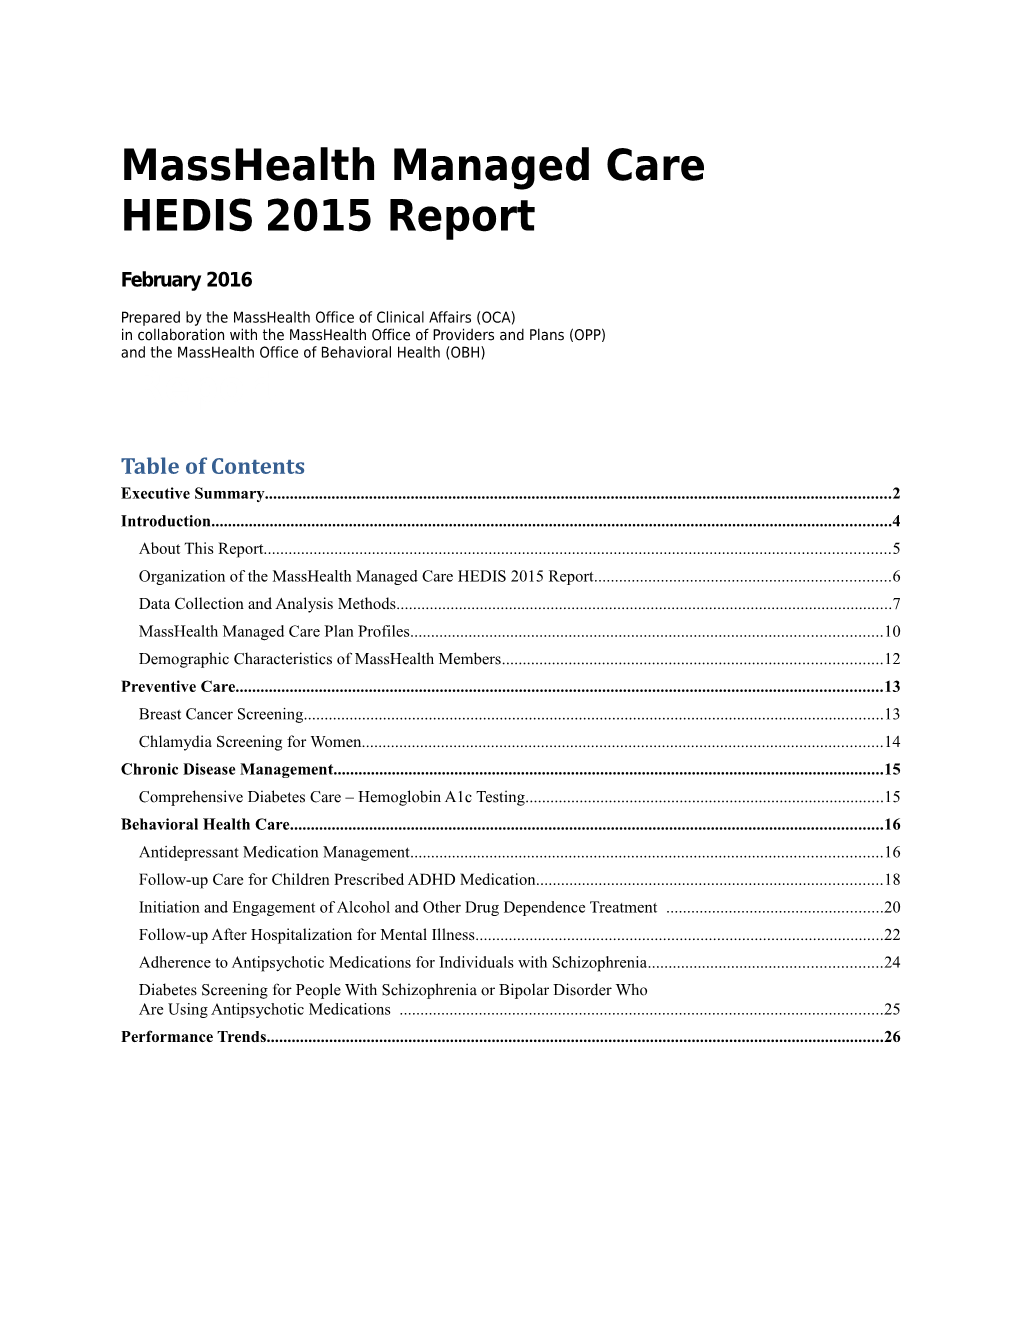 Masshealth Managed Care HEDIS2015 Report